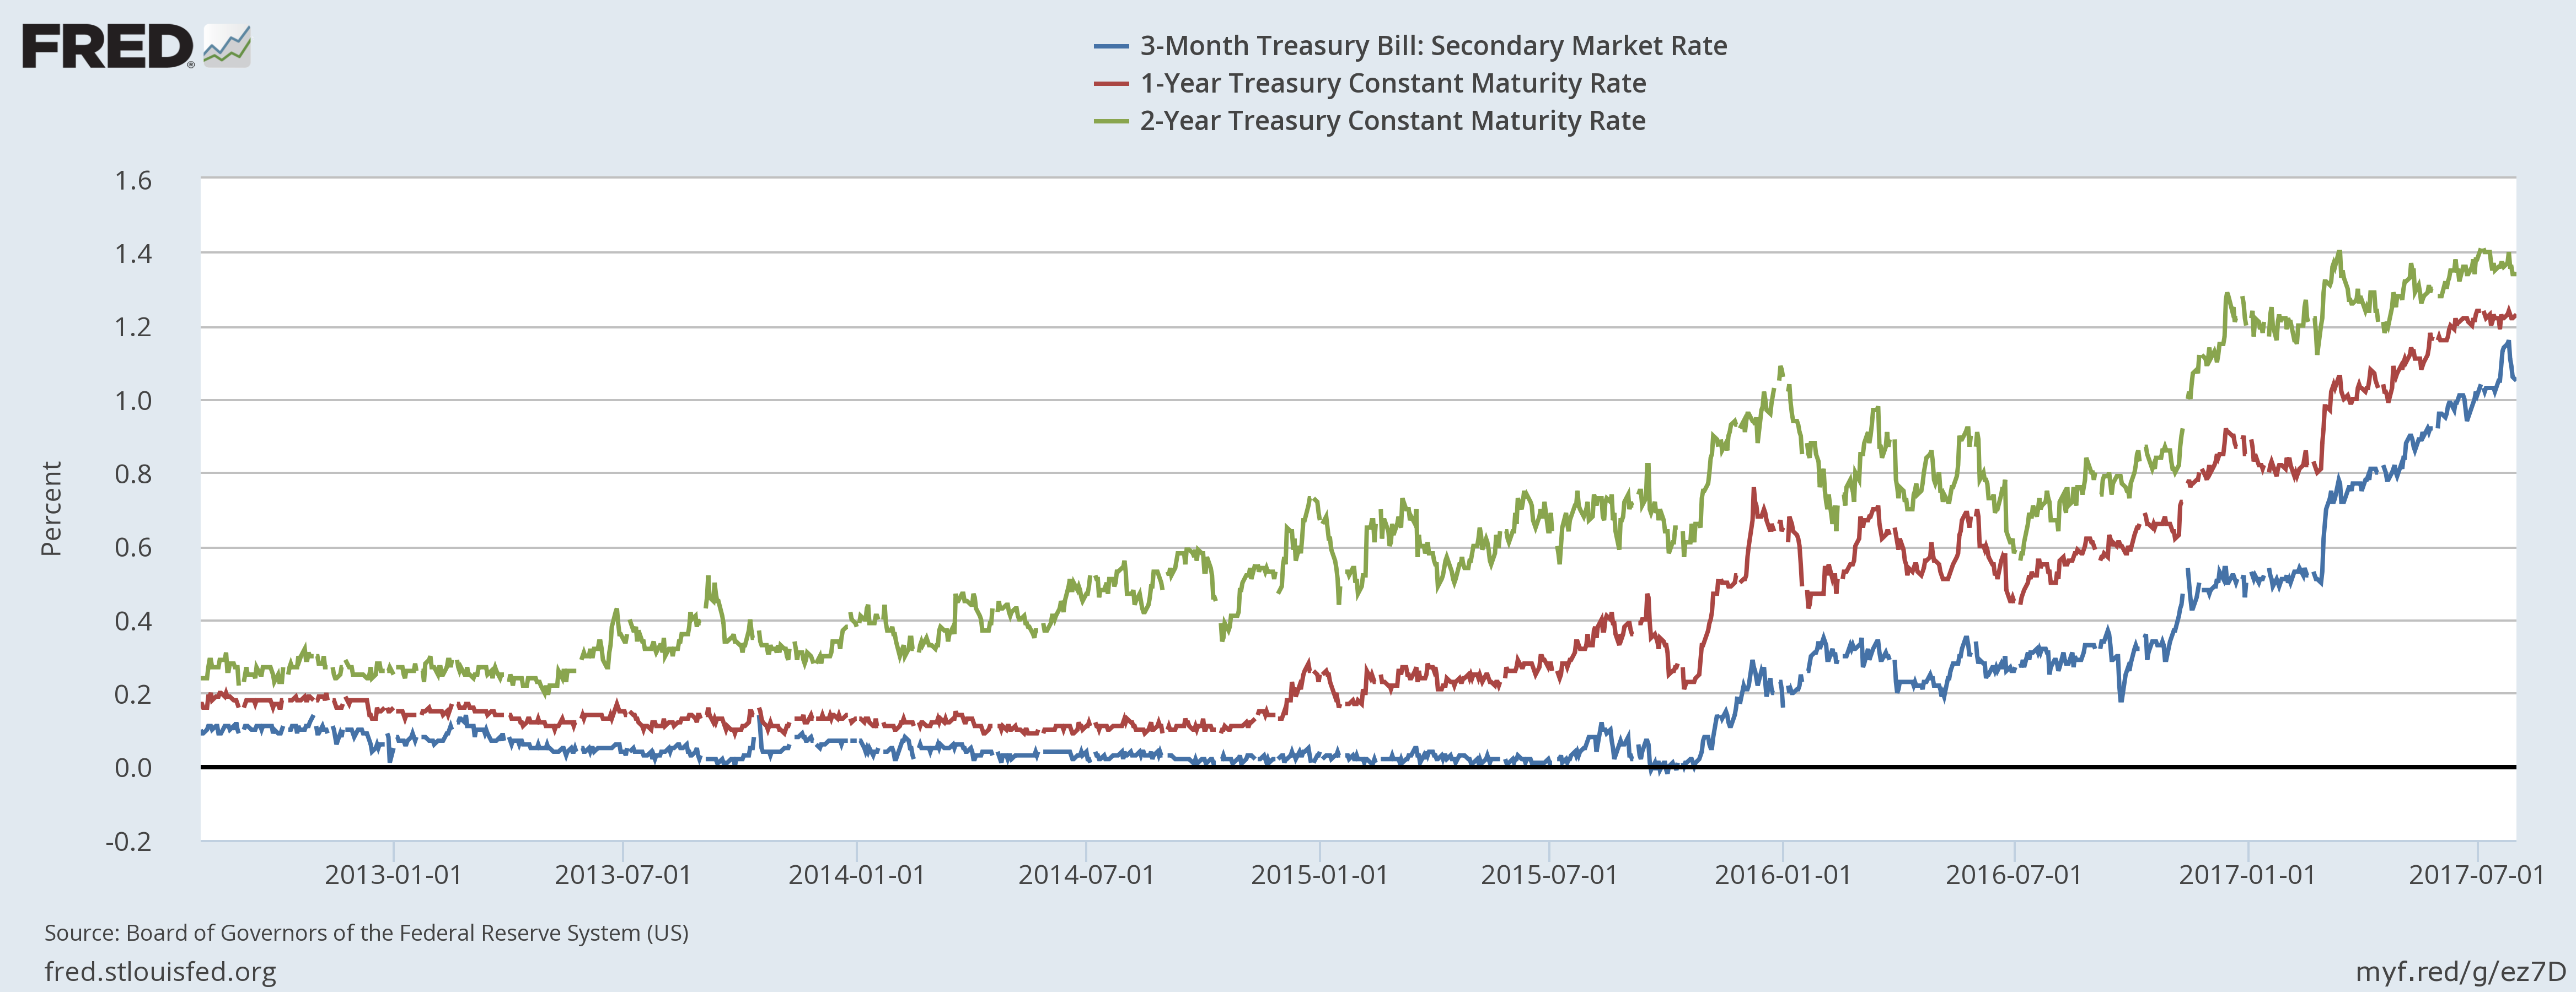 3-Month Treasury Bill Secondary Market Rate